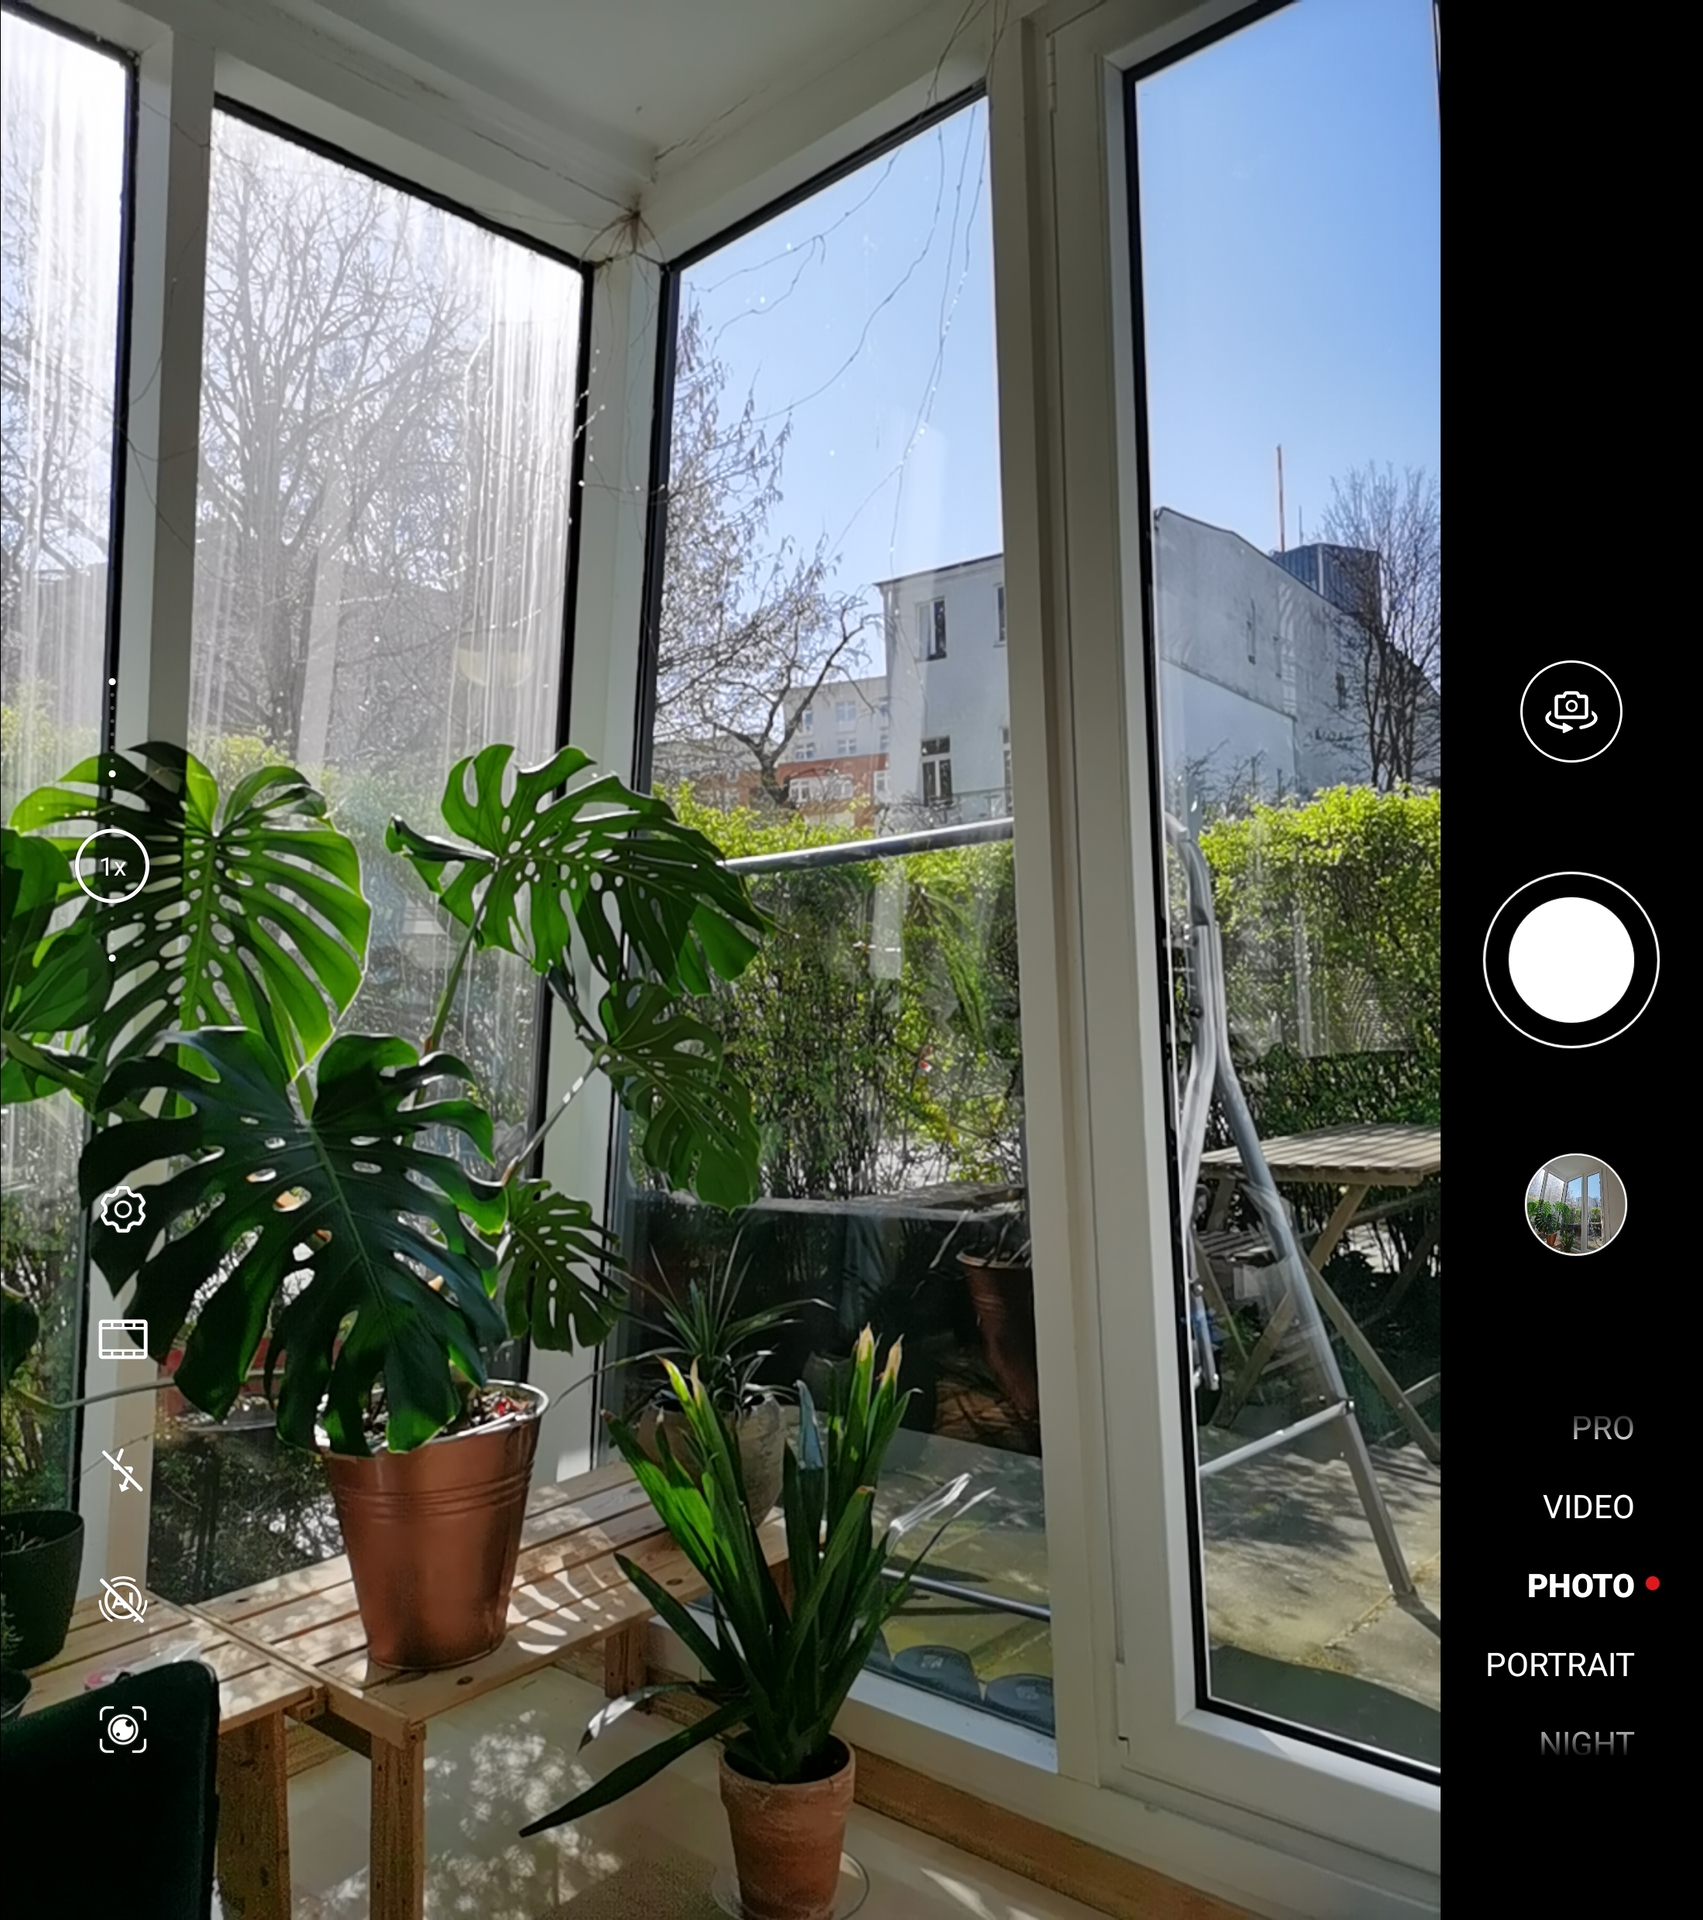 Huawei Mate Xs review tablet mode camera UI